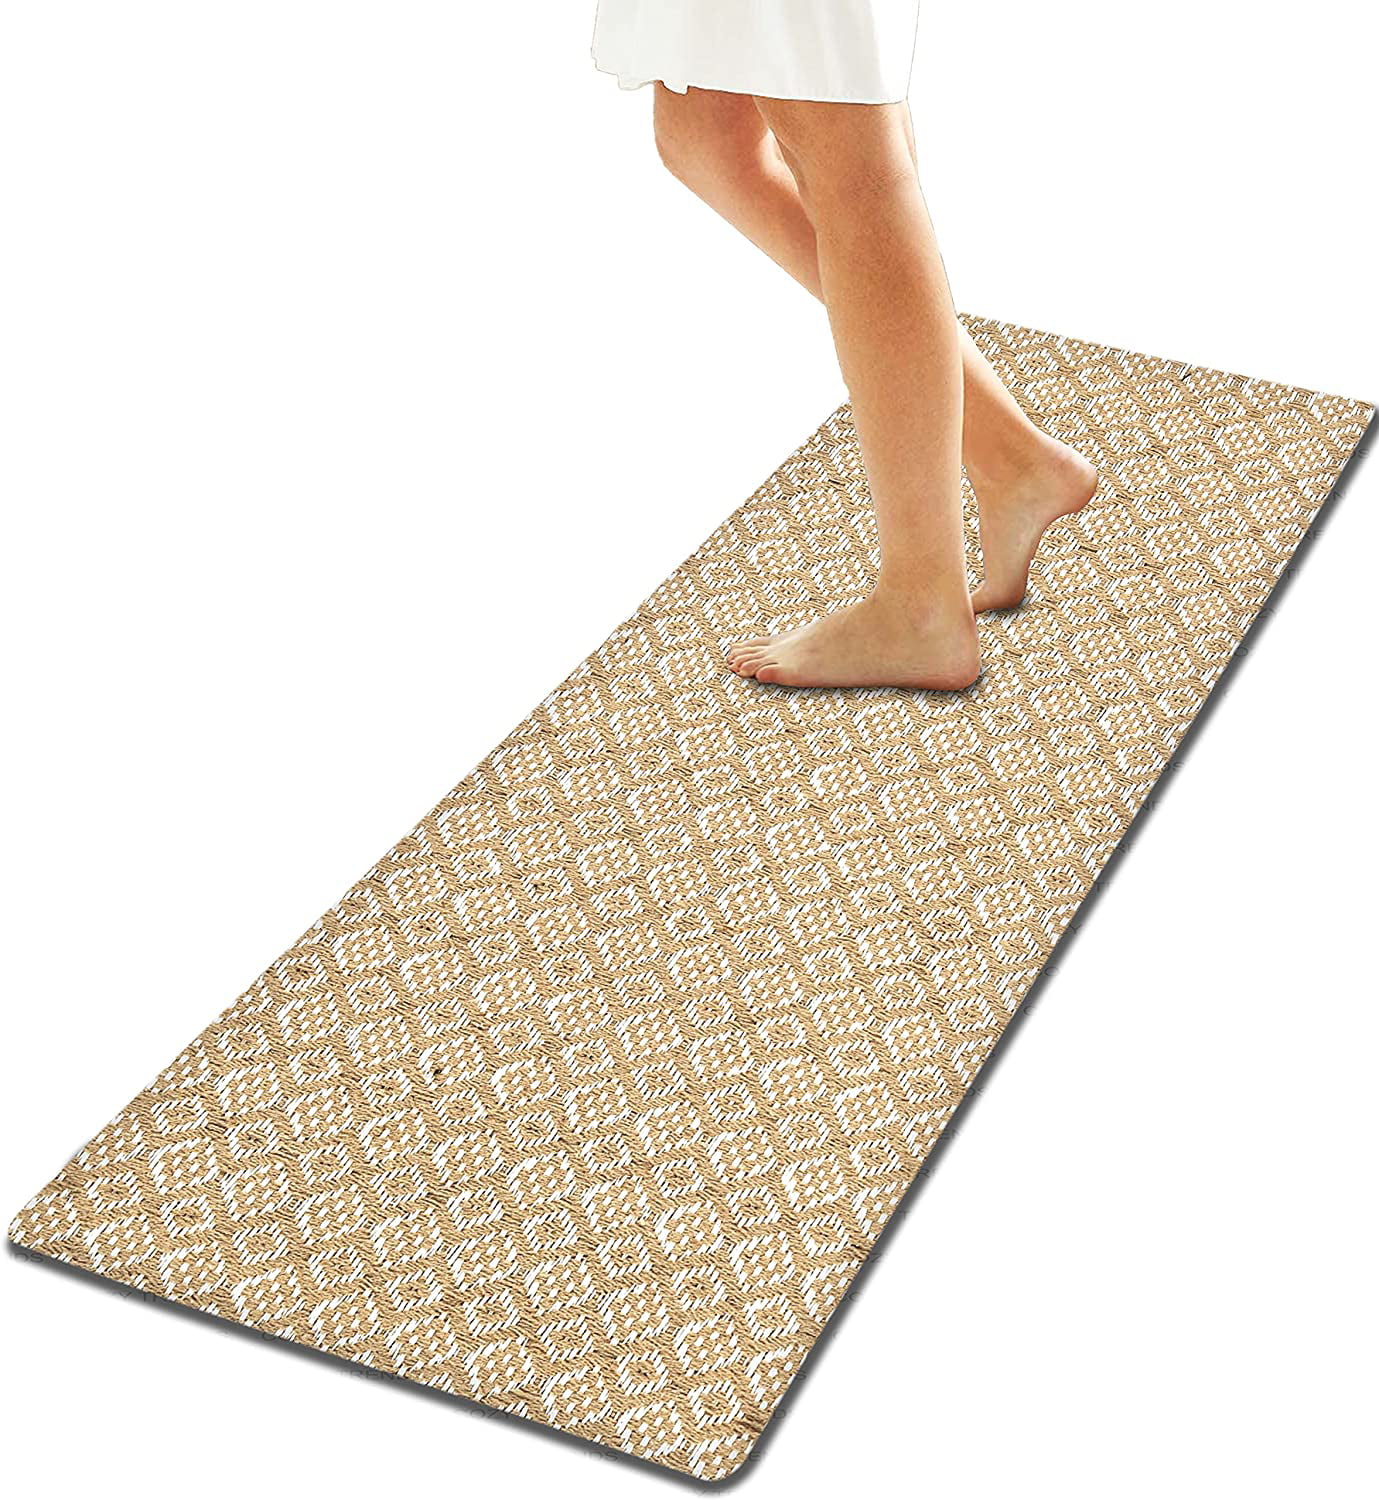 ASPMIZ Modern Kitchen Floor Mat Anti Fatigue Cushioned, Marble Kitchen  Runner Rug Non Slip Washable, Waterproof Comfort Standing Mat PVC Doormat  Gel